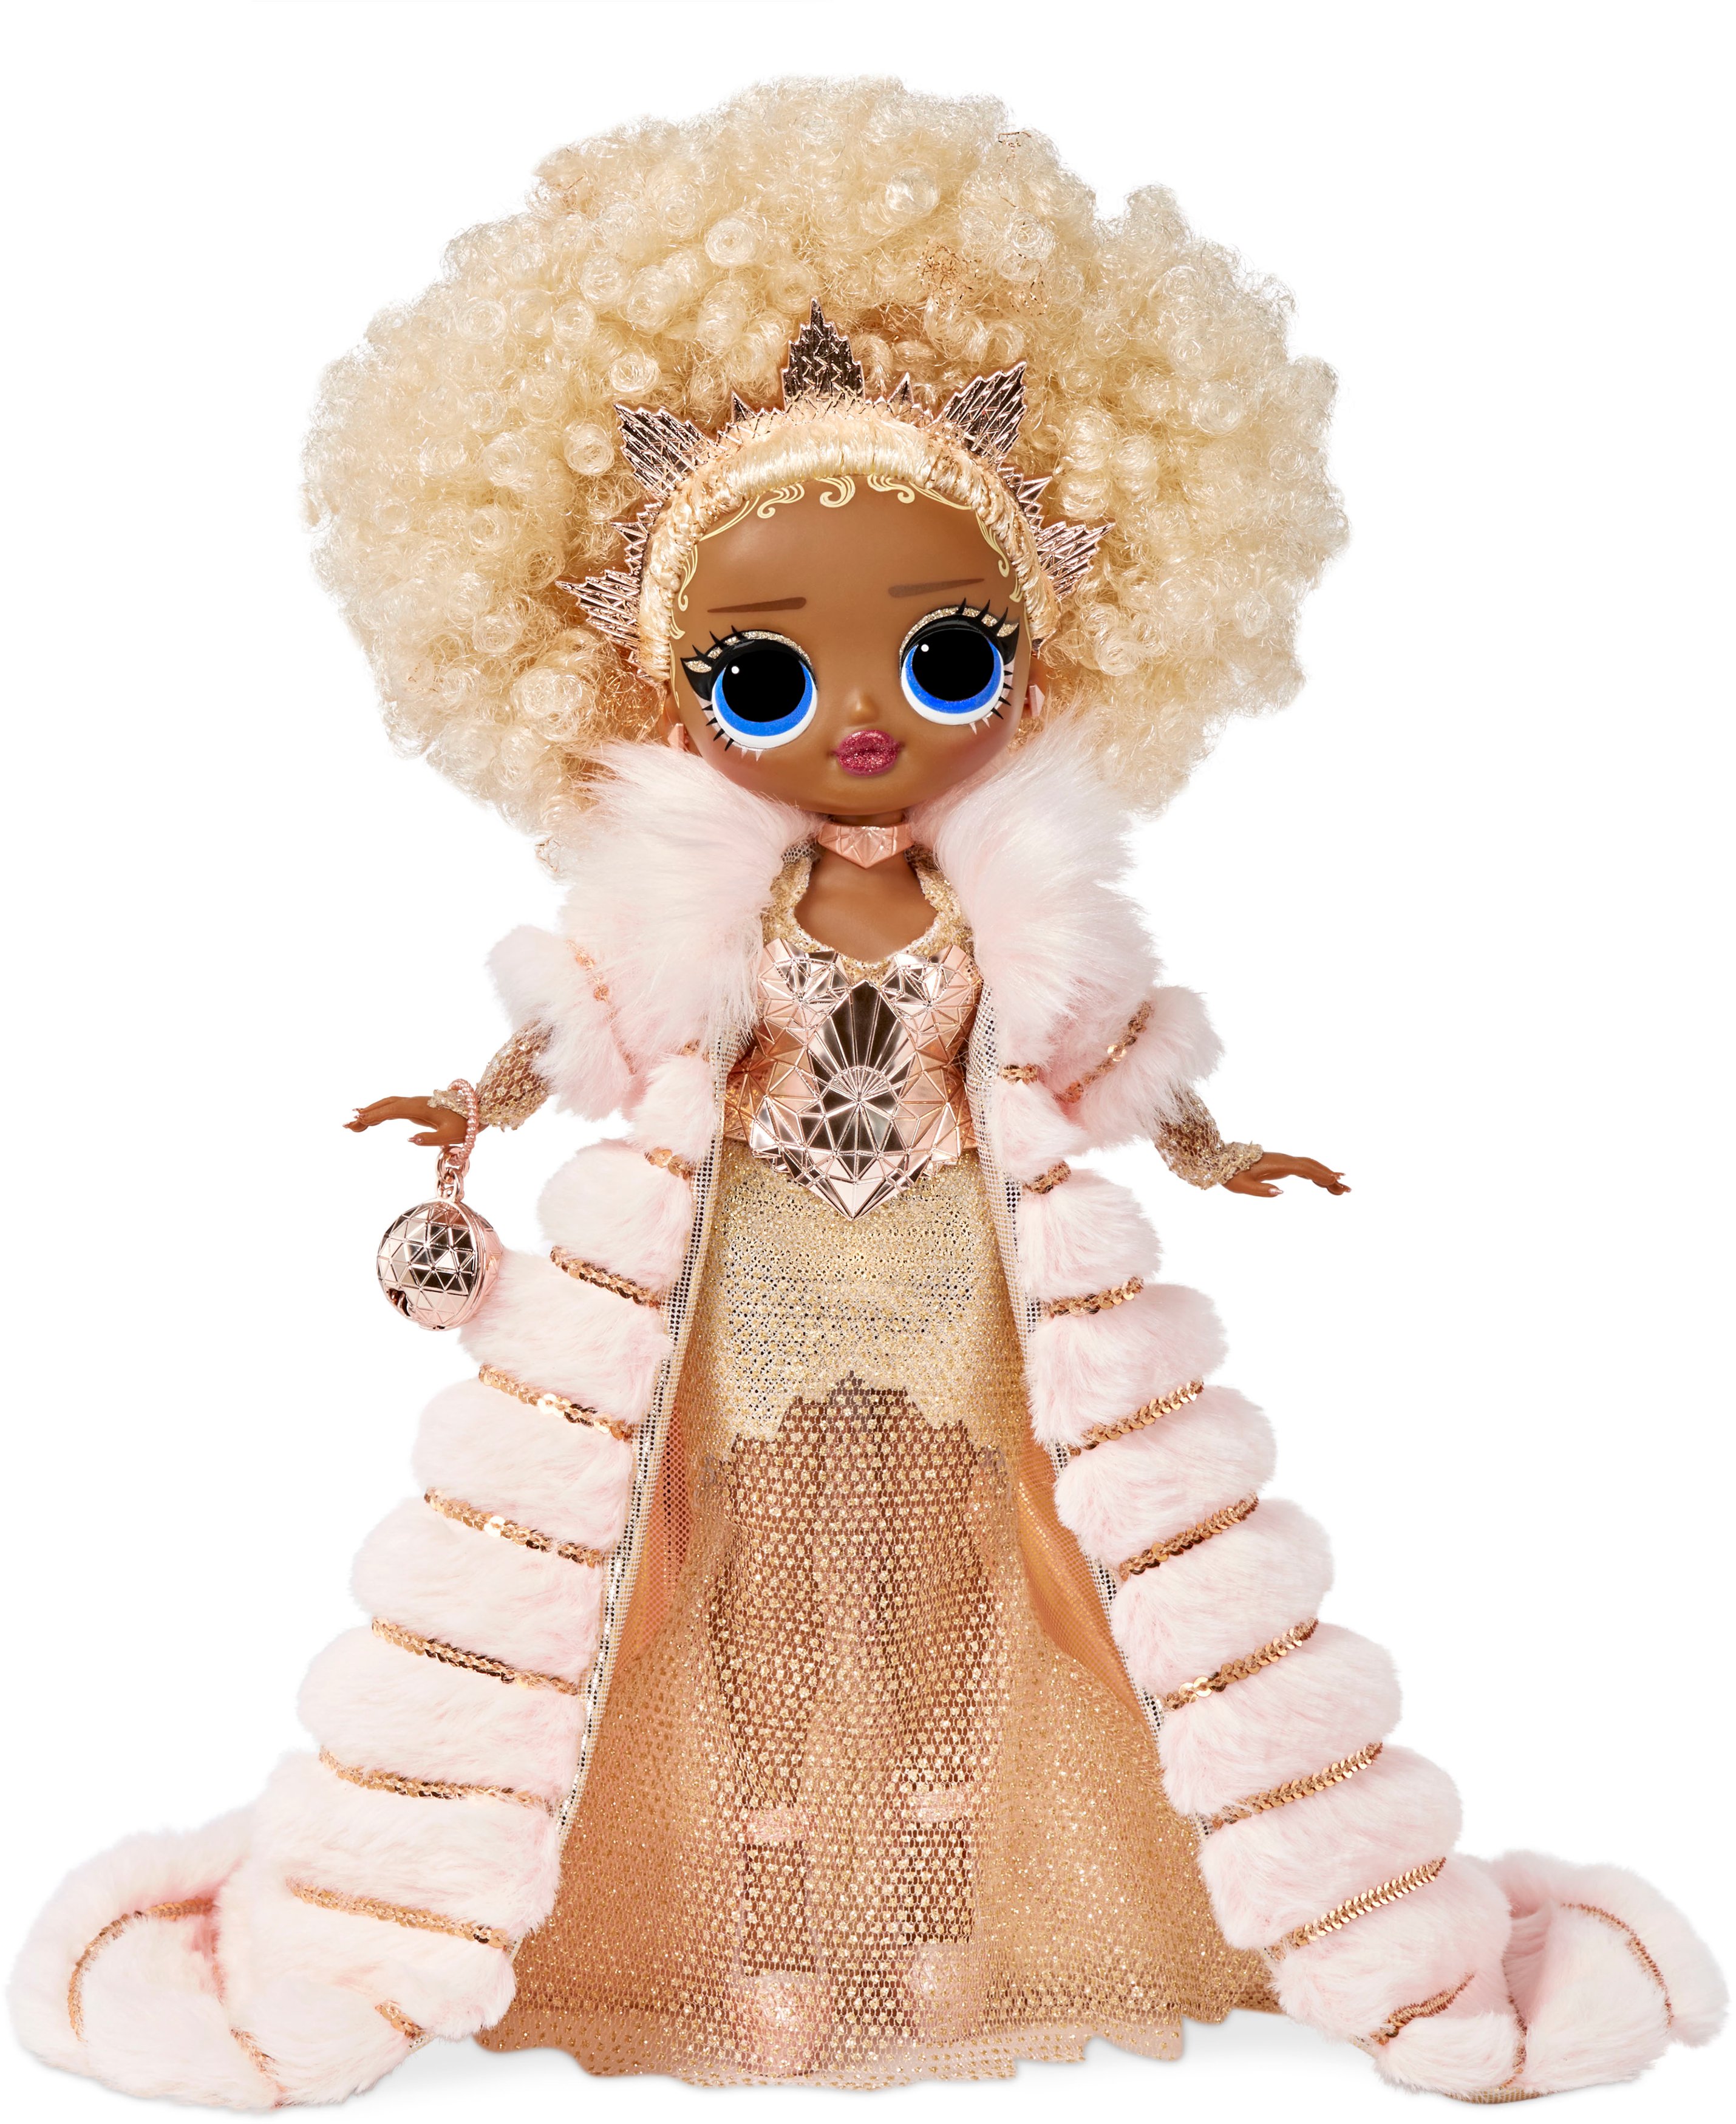 L.O.L. Surprise! LOL Surprise OPP OMG Doll Assortment 985426EUC - Best Buy